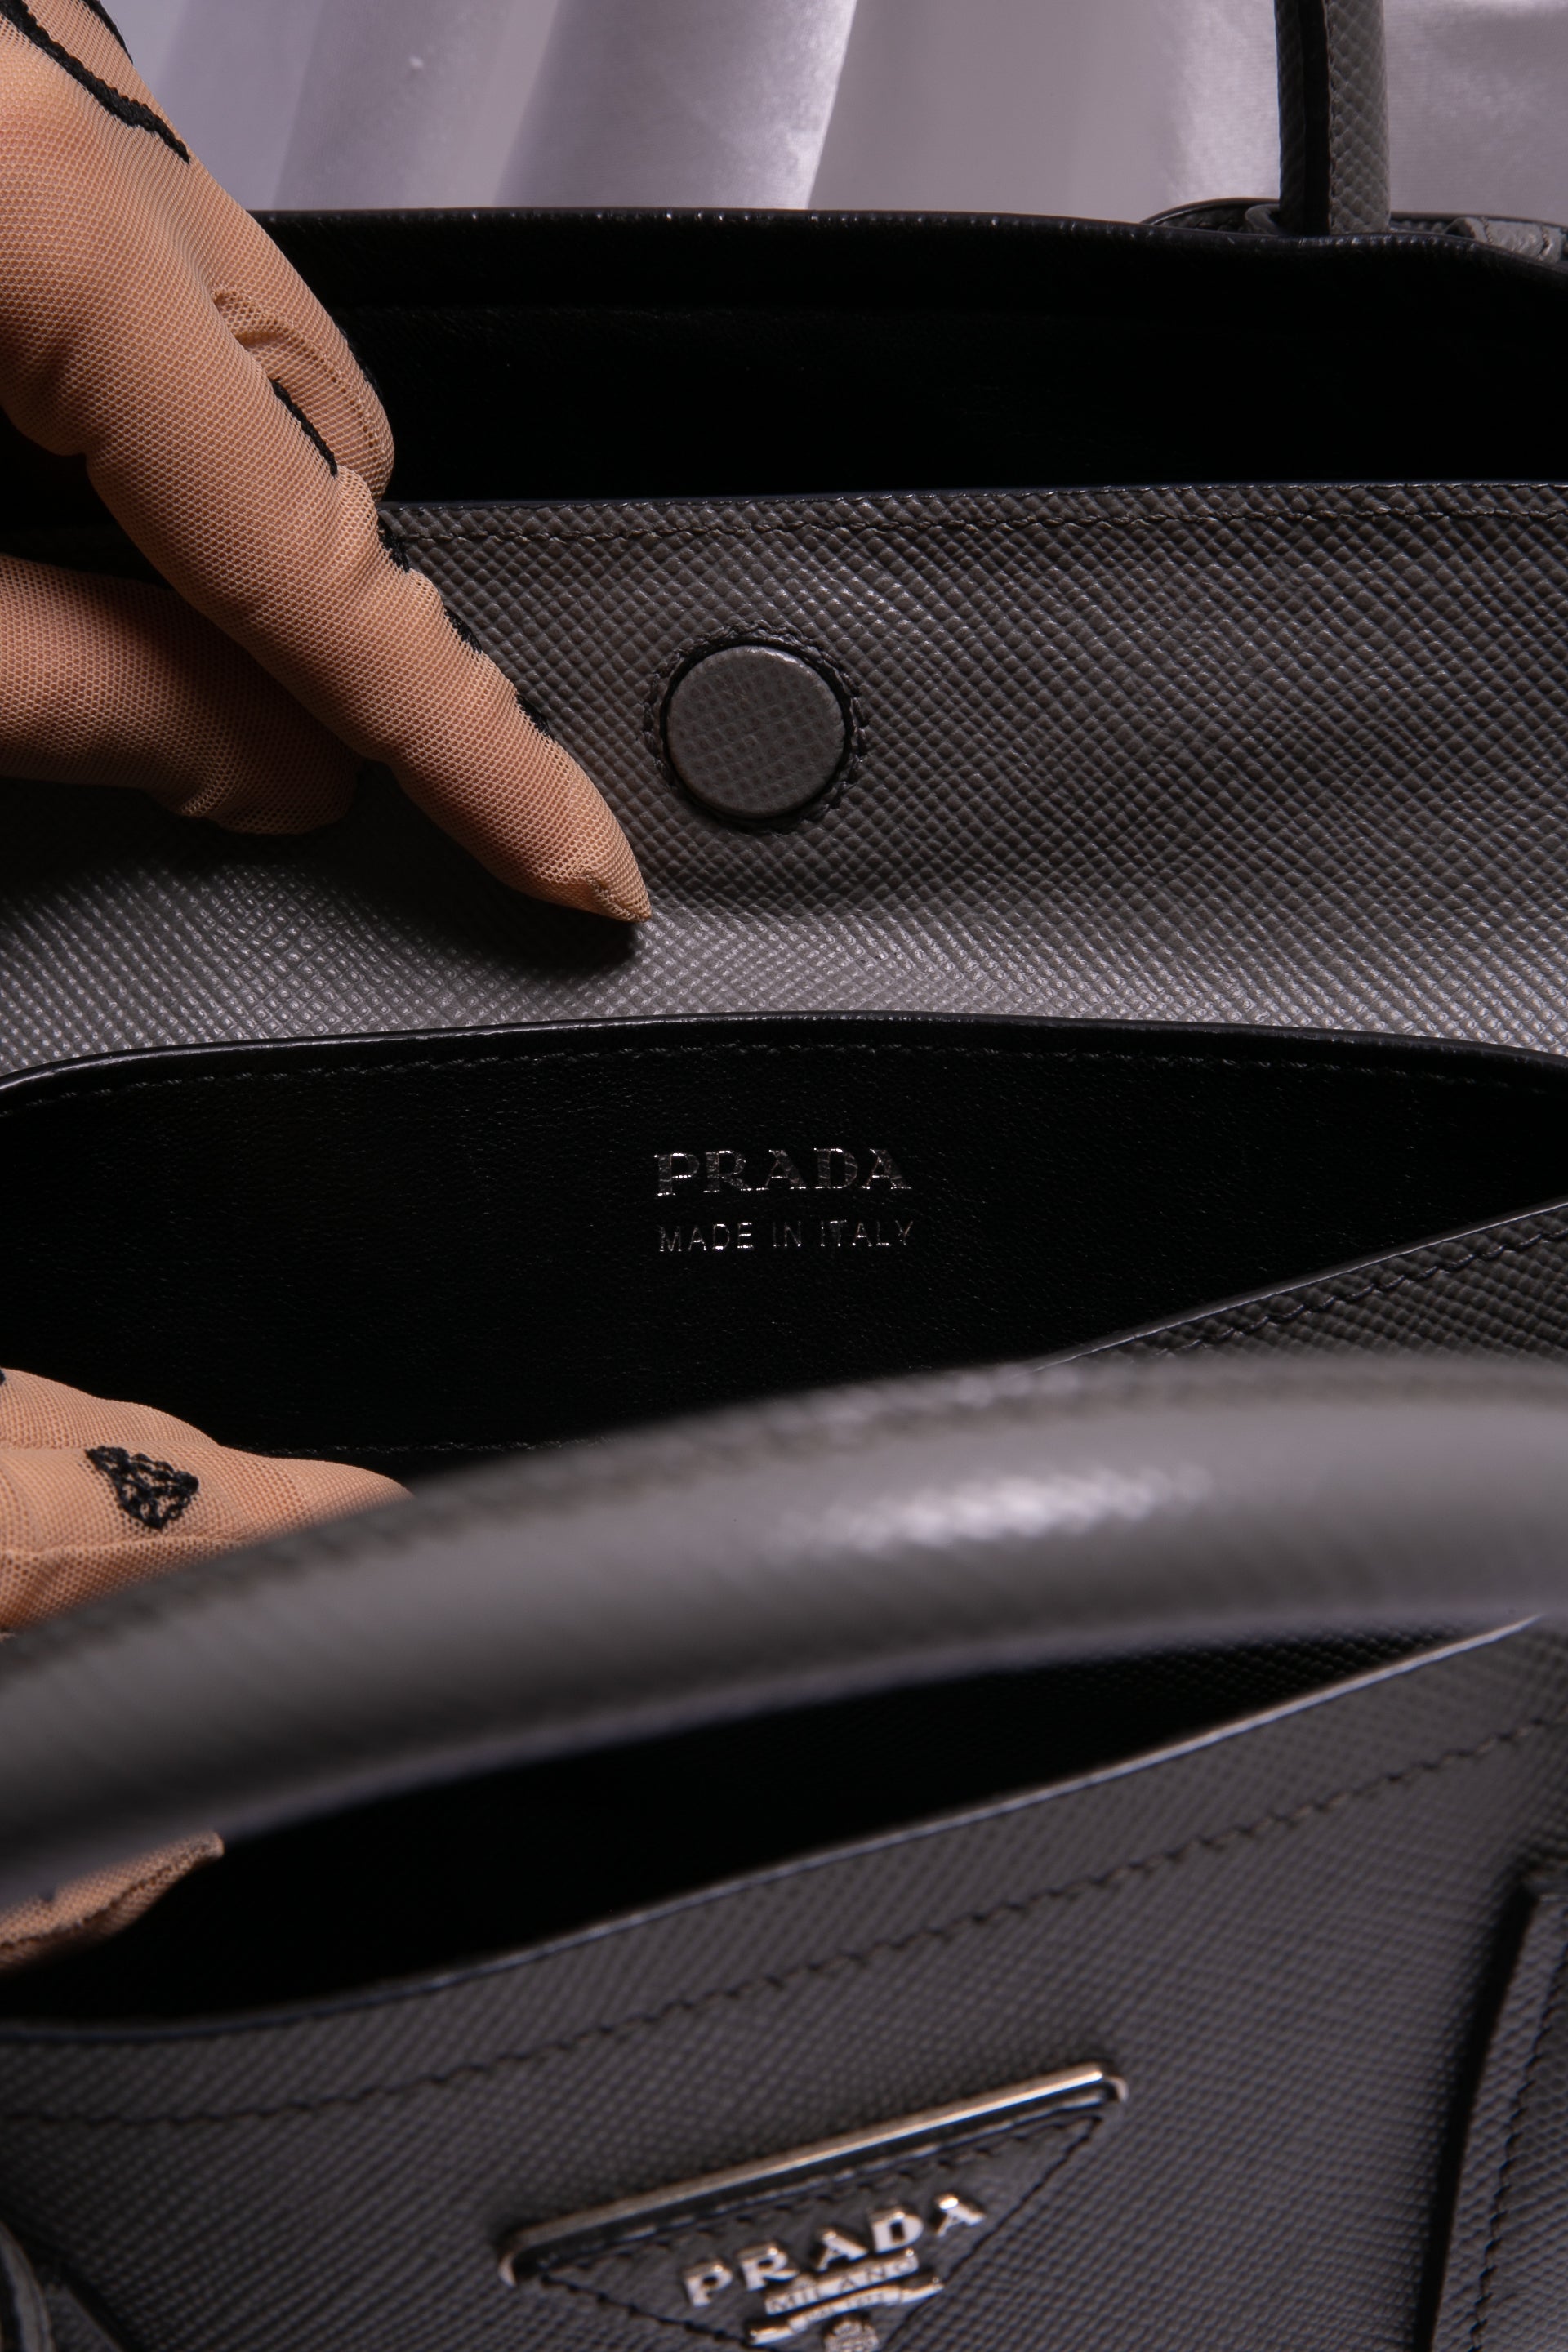 Medium Saffiano Leather Double Prada Bag